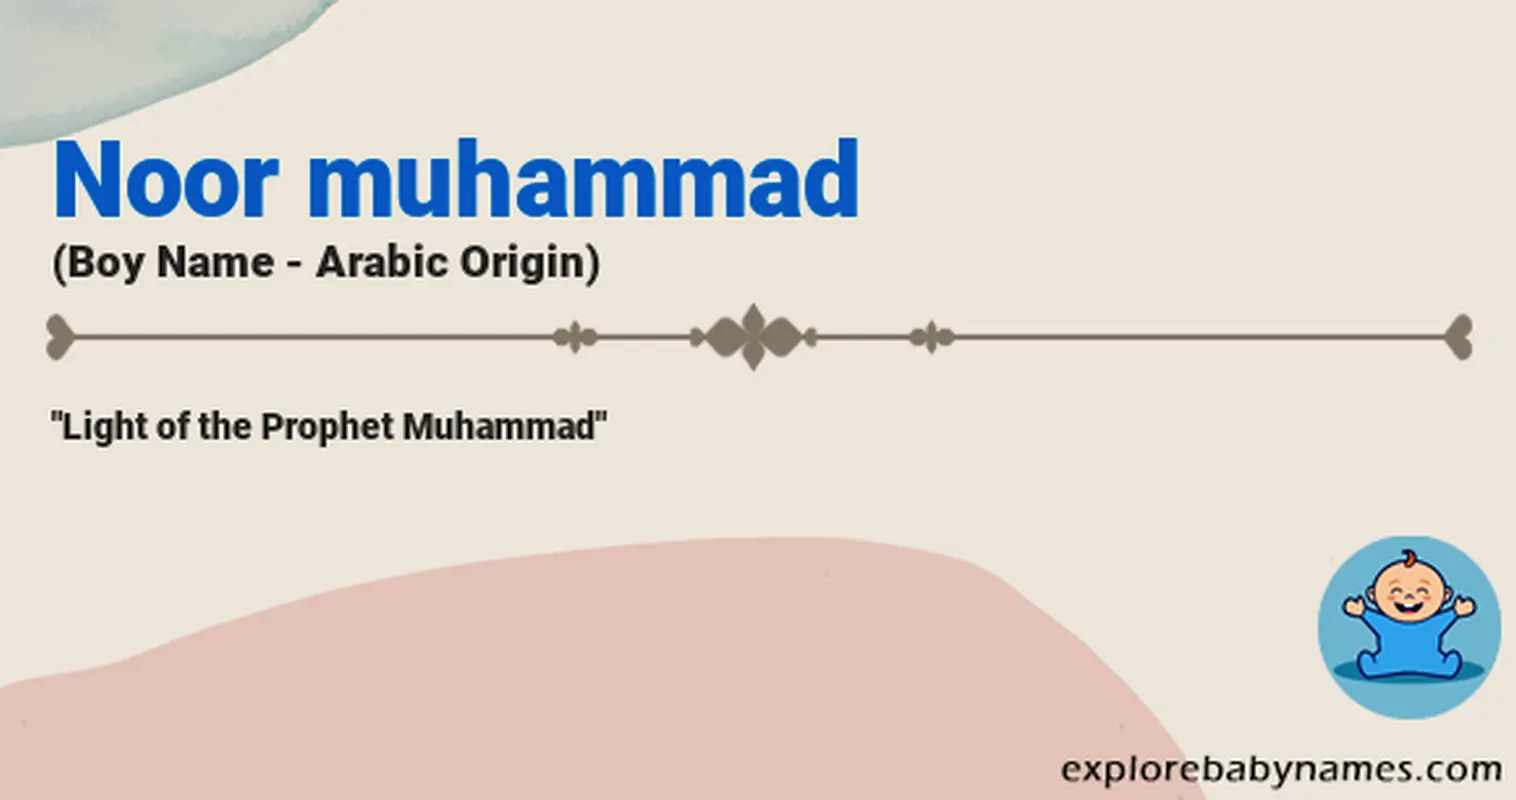 Meaning of Noor muhammad